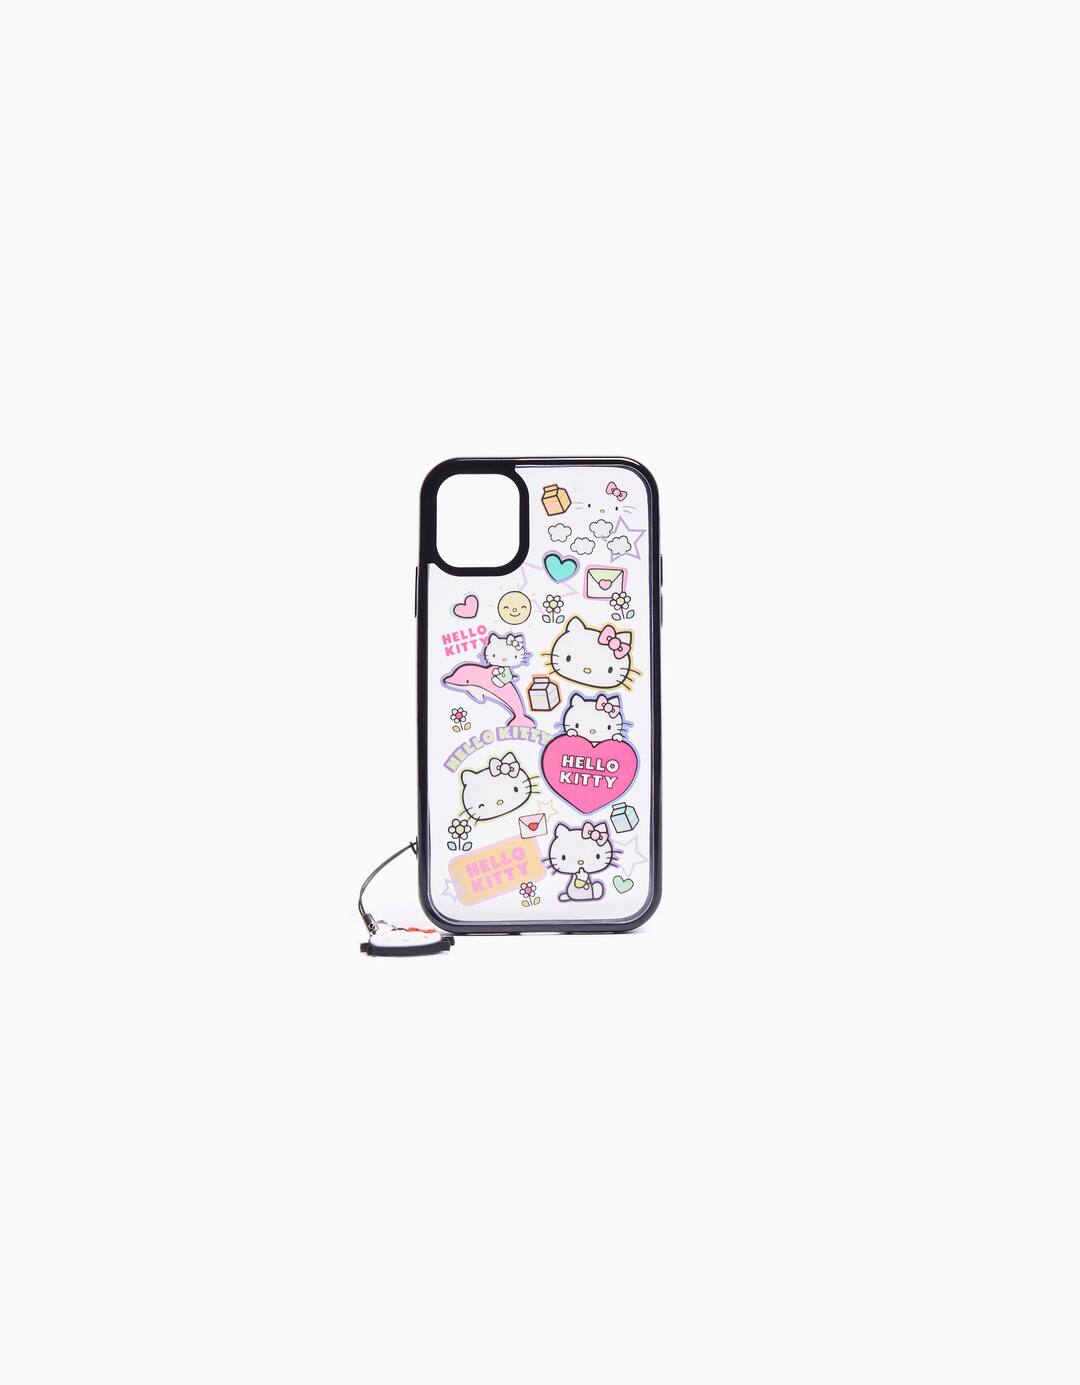 Coque Hello Kitty iPhone charm